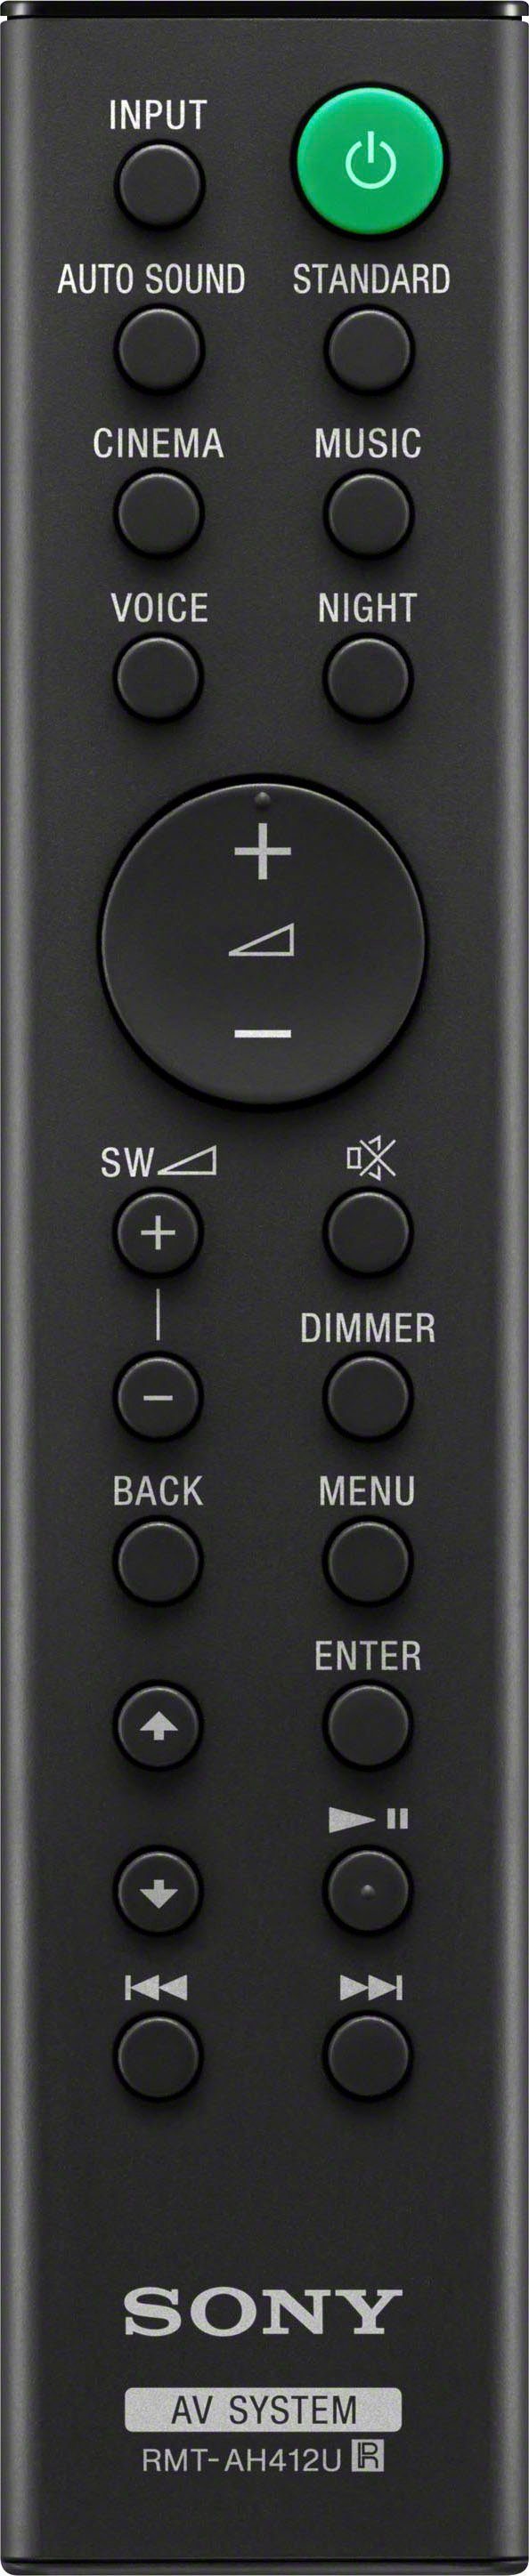 Sony HT-S40R Kanal- kabelgebundenem Subwoofer, inkl. Soundbar W, Rear-Lautsprechern) 600 5.1 kabellosen (Bluetooth